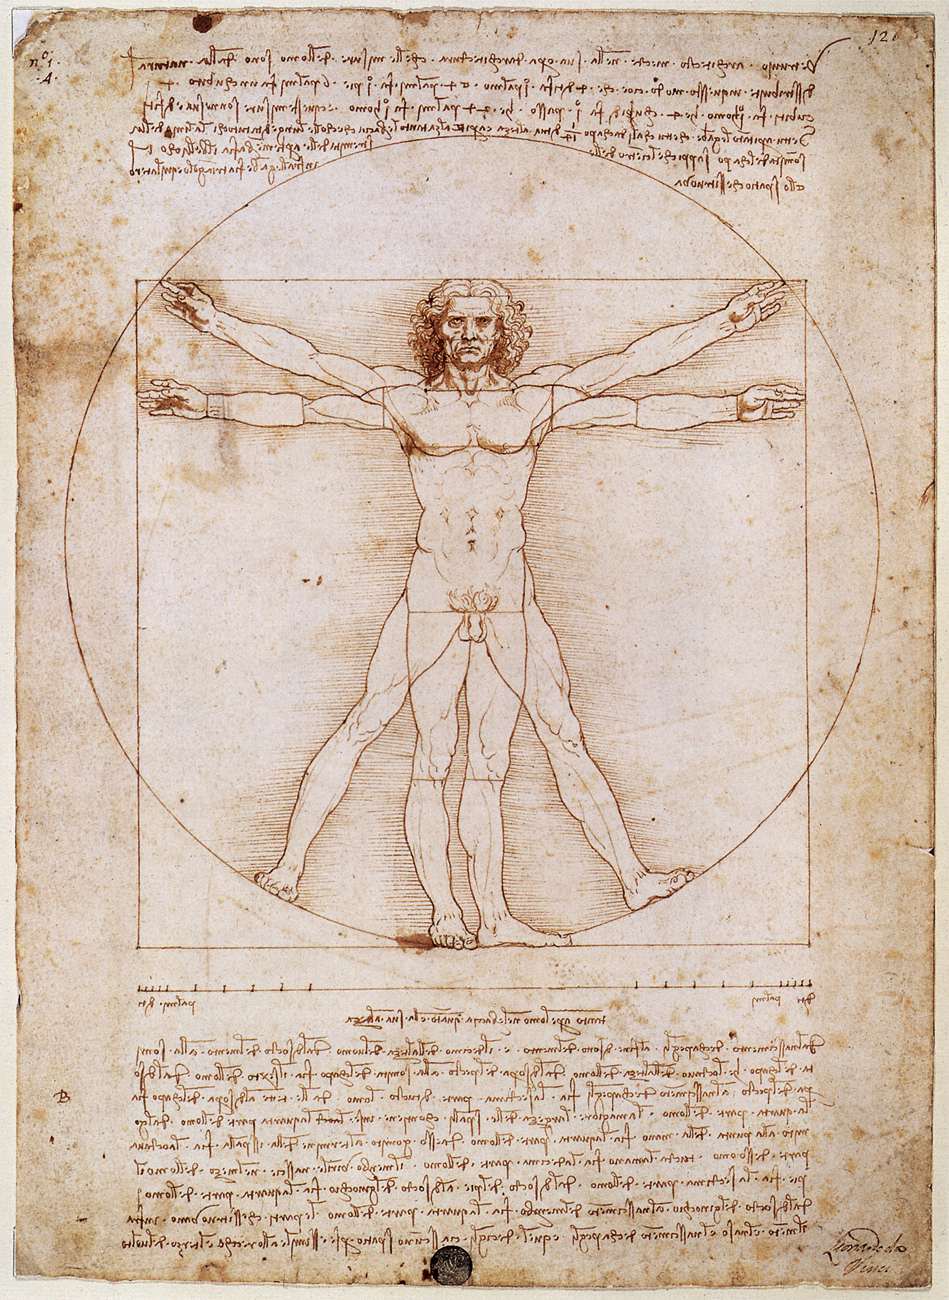 Leonardo DaVinci’s famous drawing of anatomical man